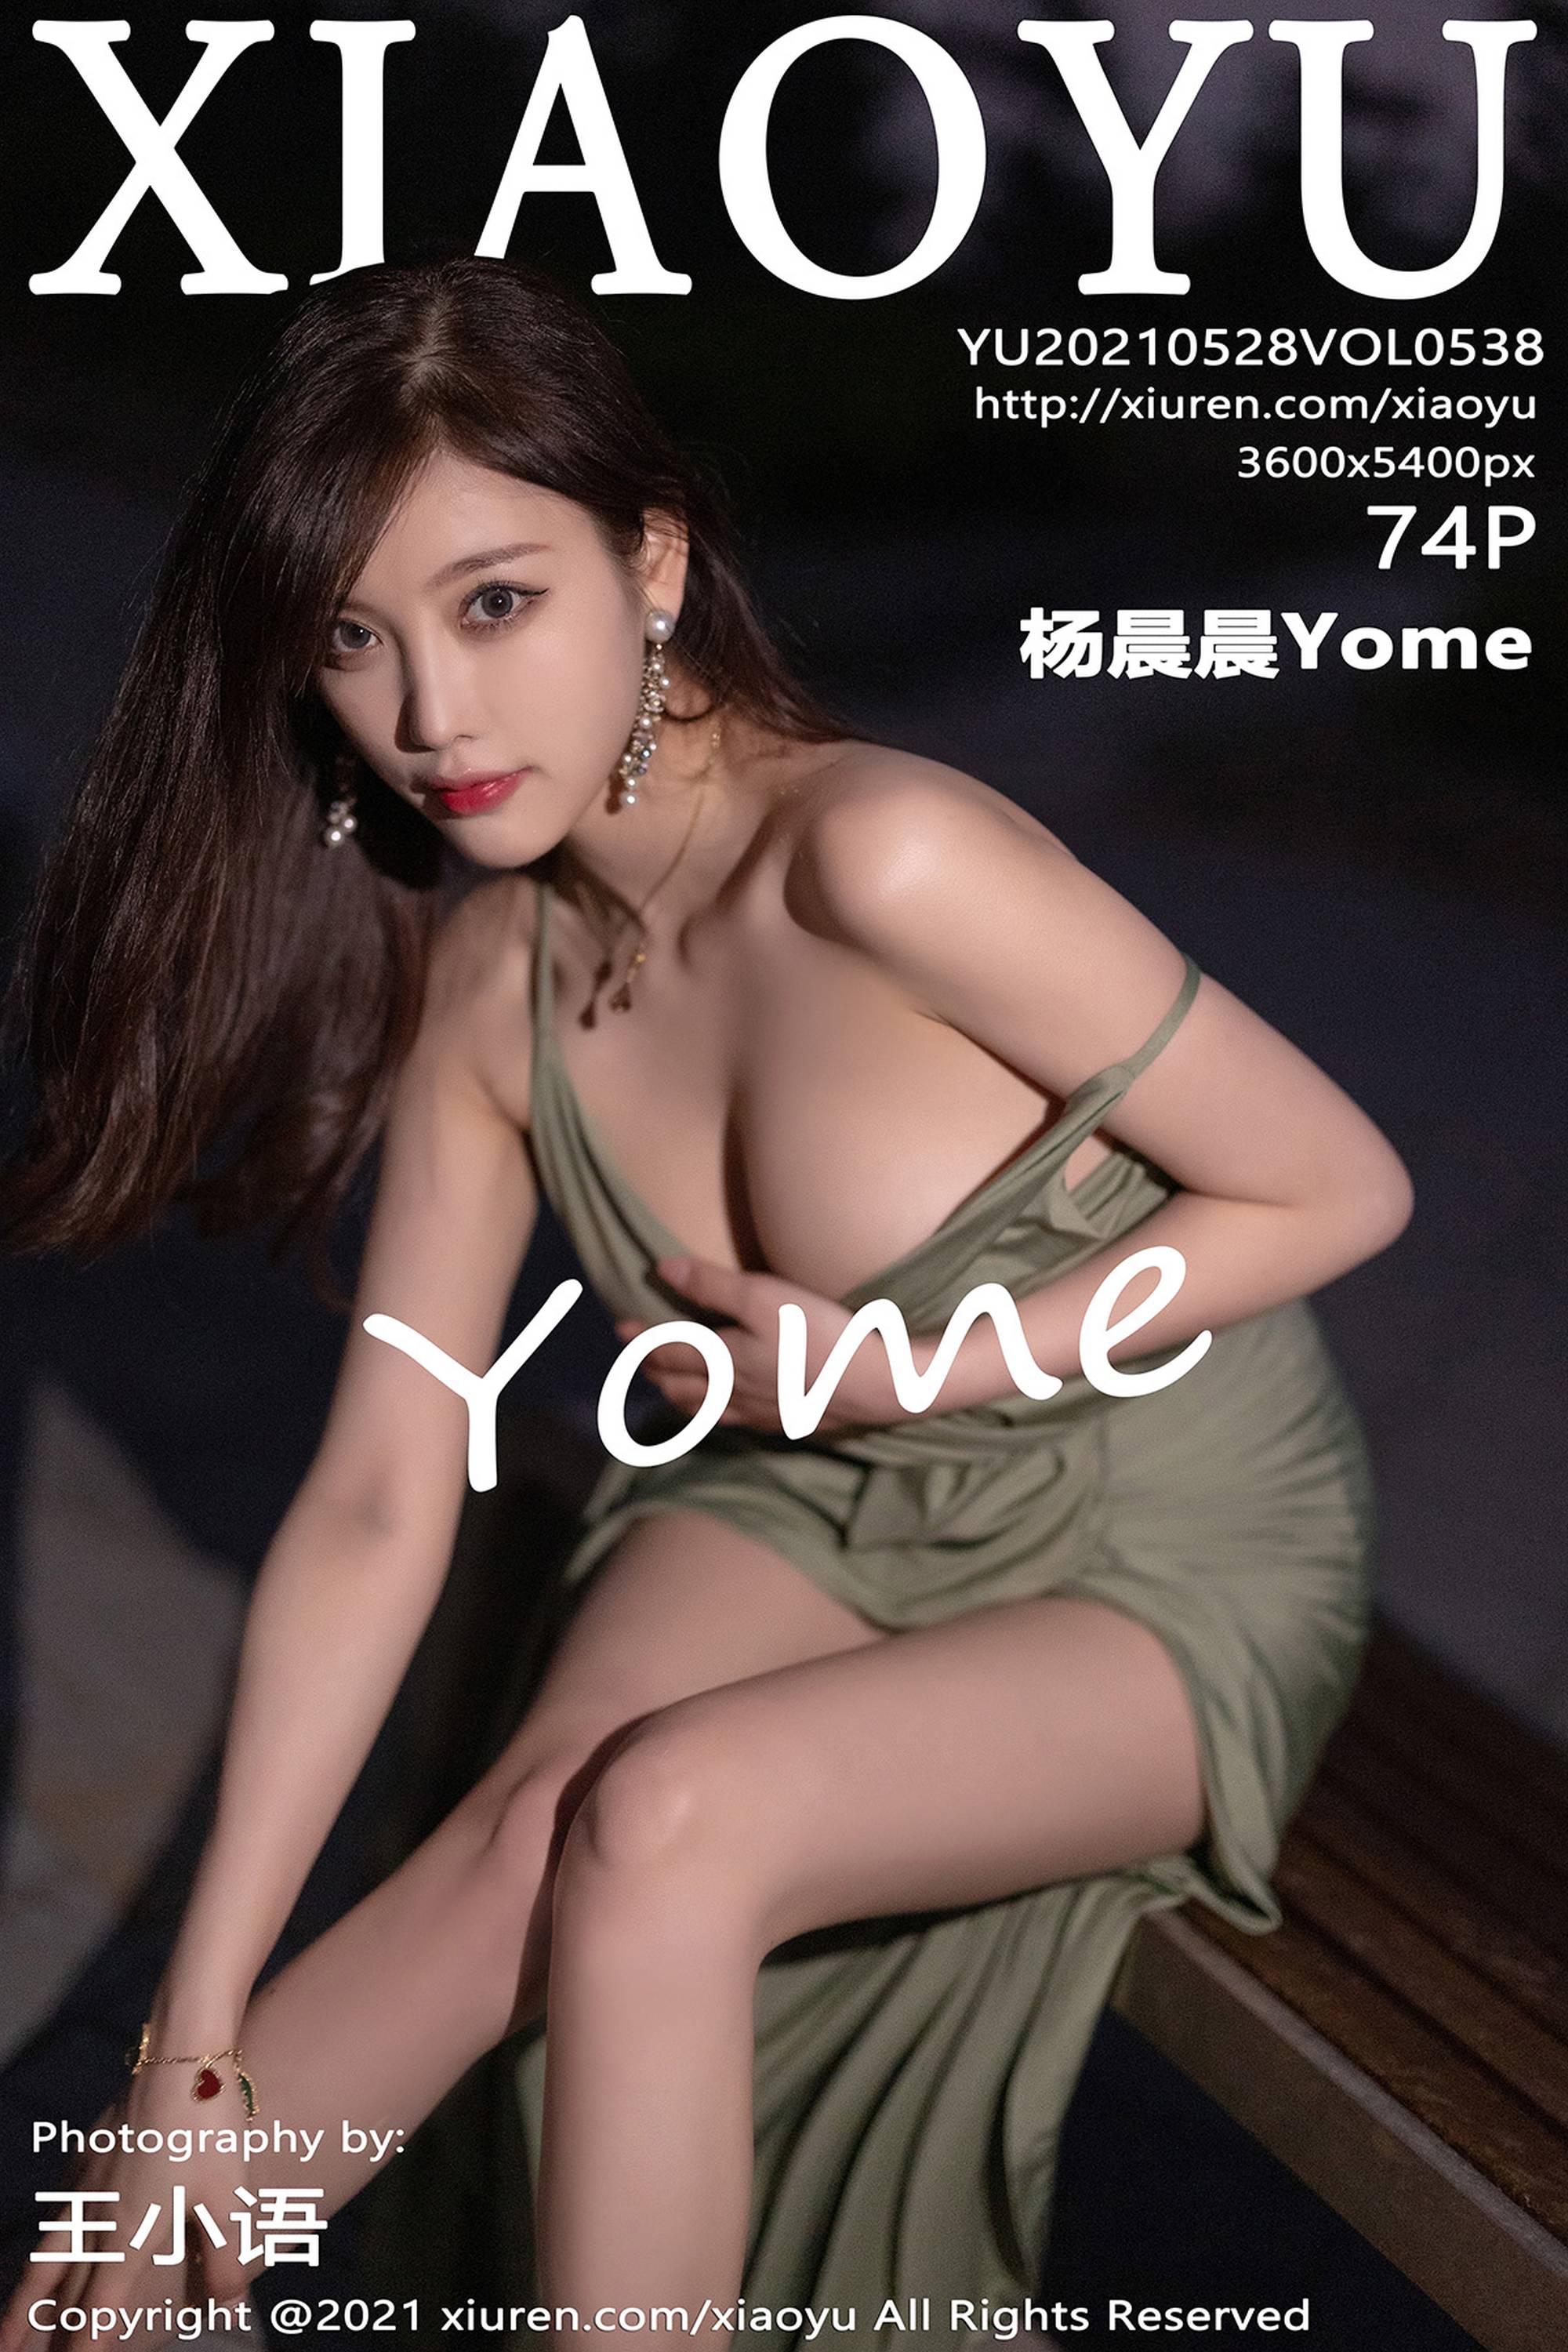 【XIAOYU畫語系列】2021.05.28 Vol.538 楊晨晨Yome 完整版無水印寫真【75P】 - 貼圖 - 絲襪美腿 -